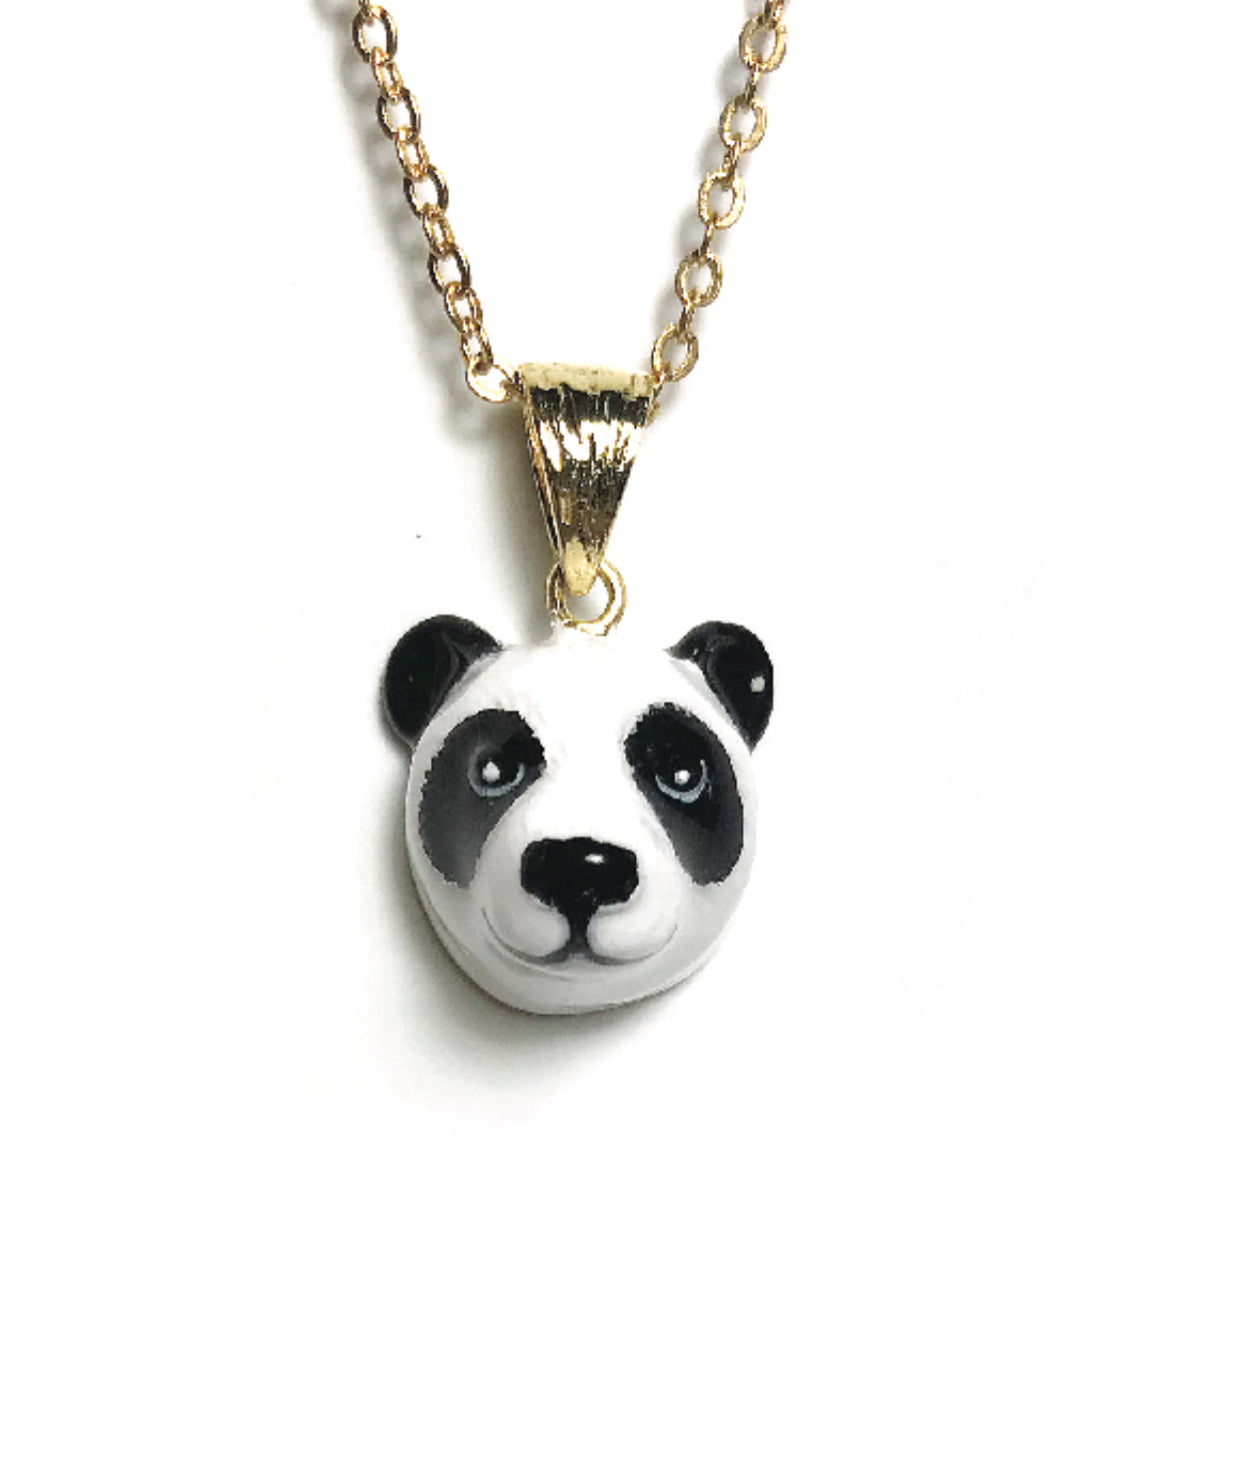 Handmade Panda Face Necklace